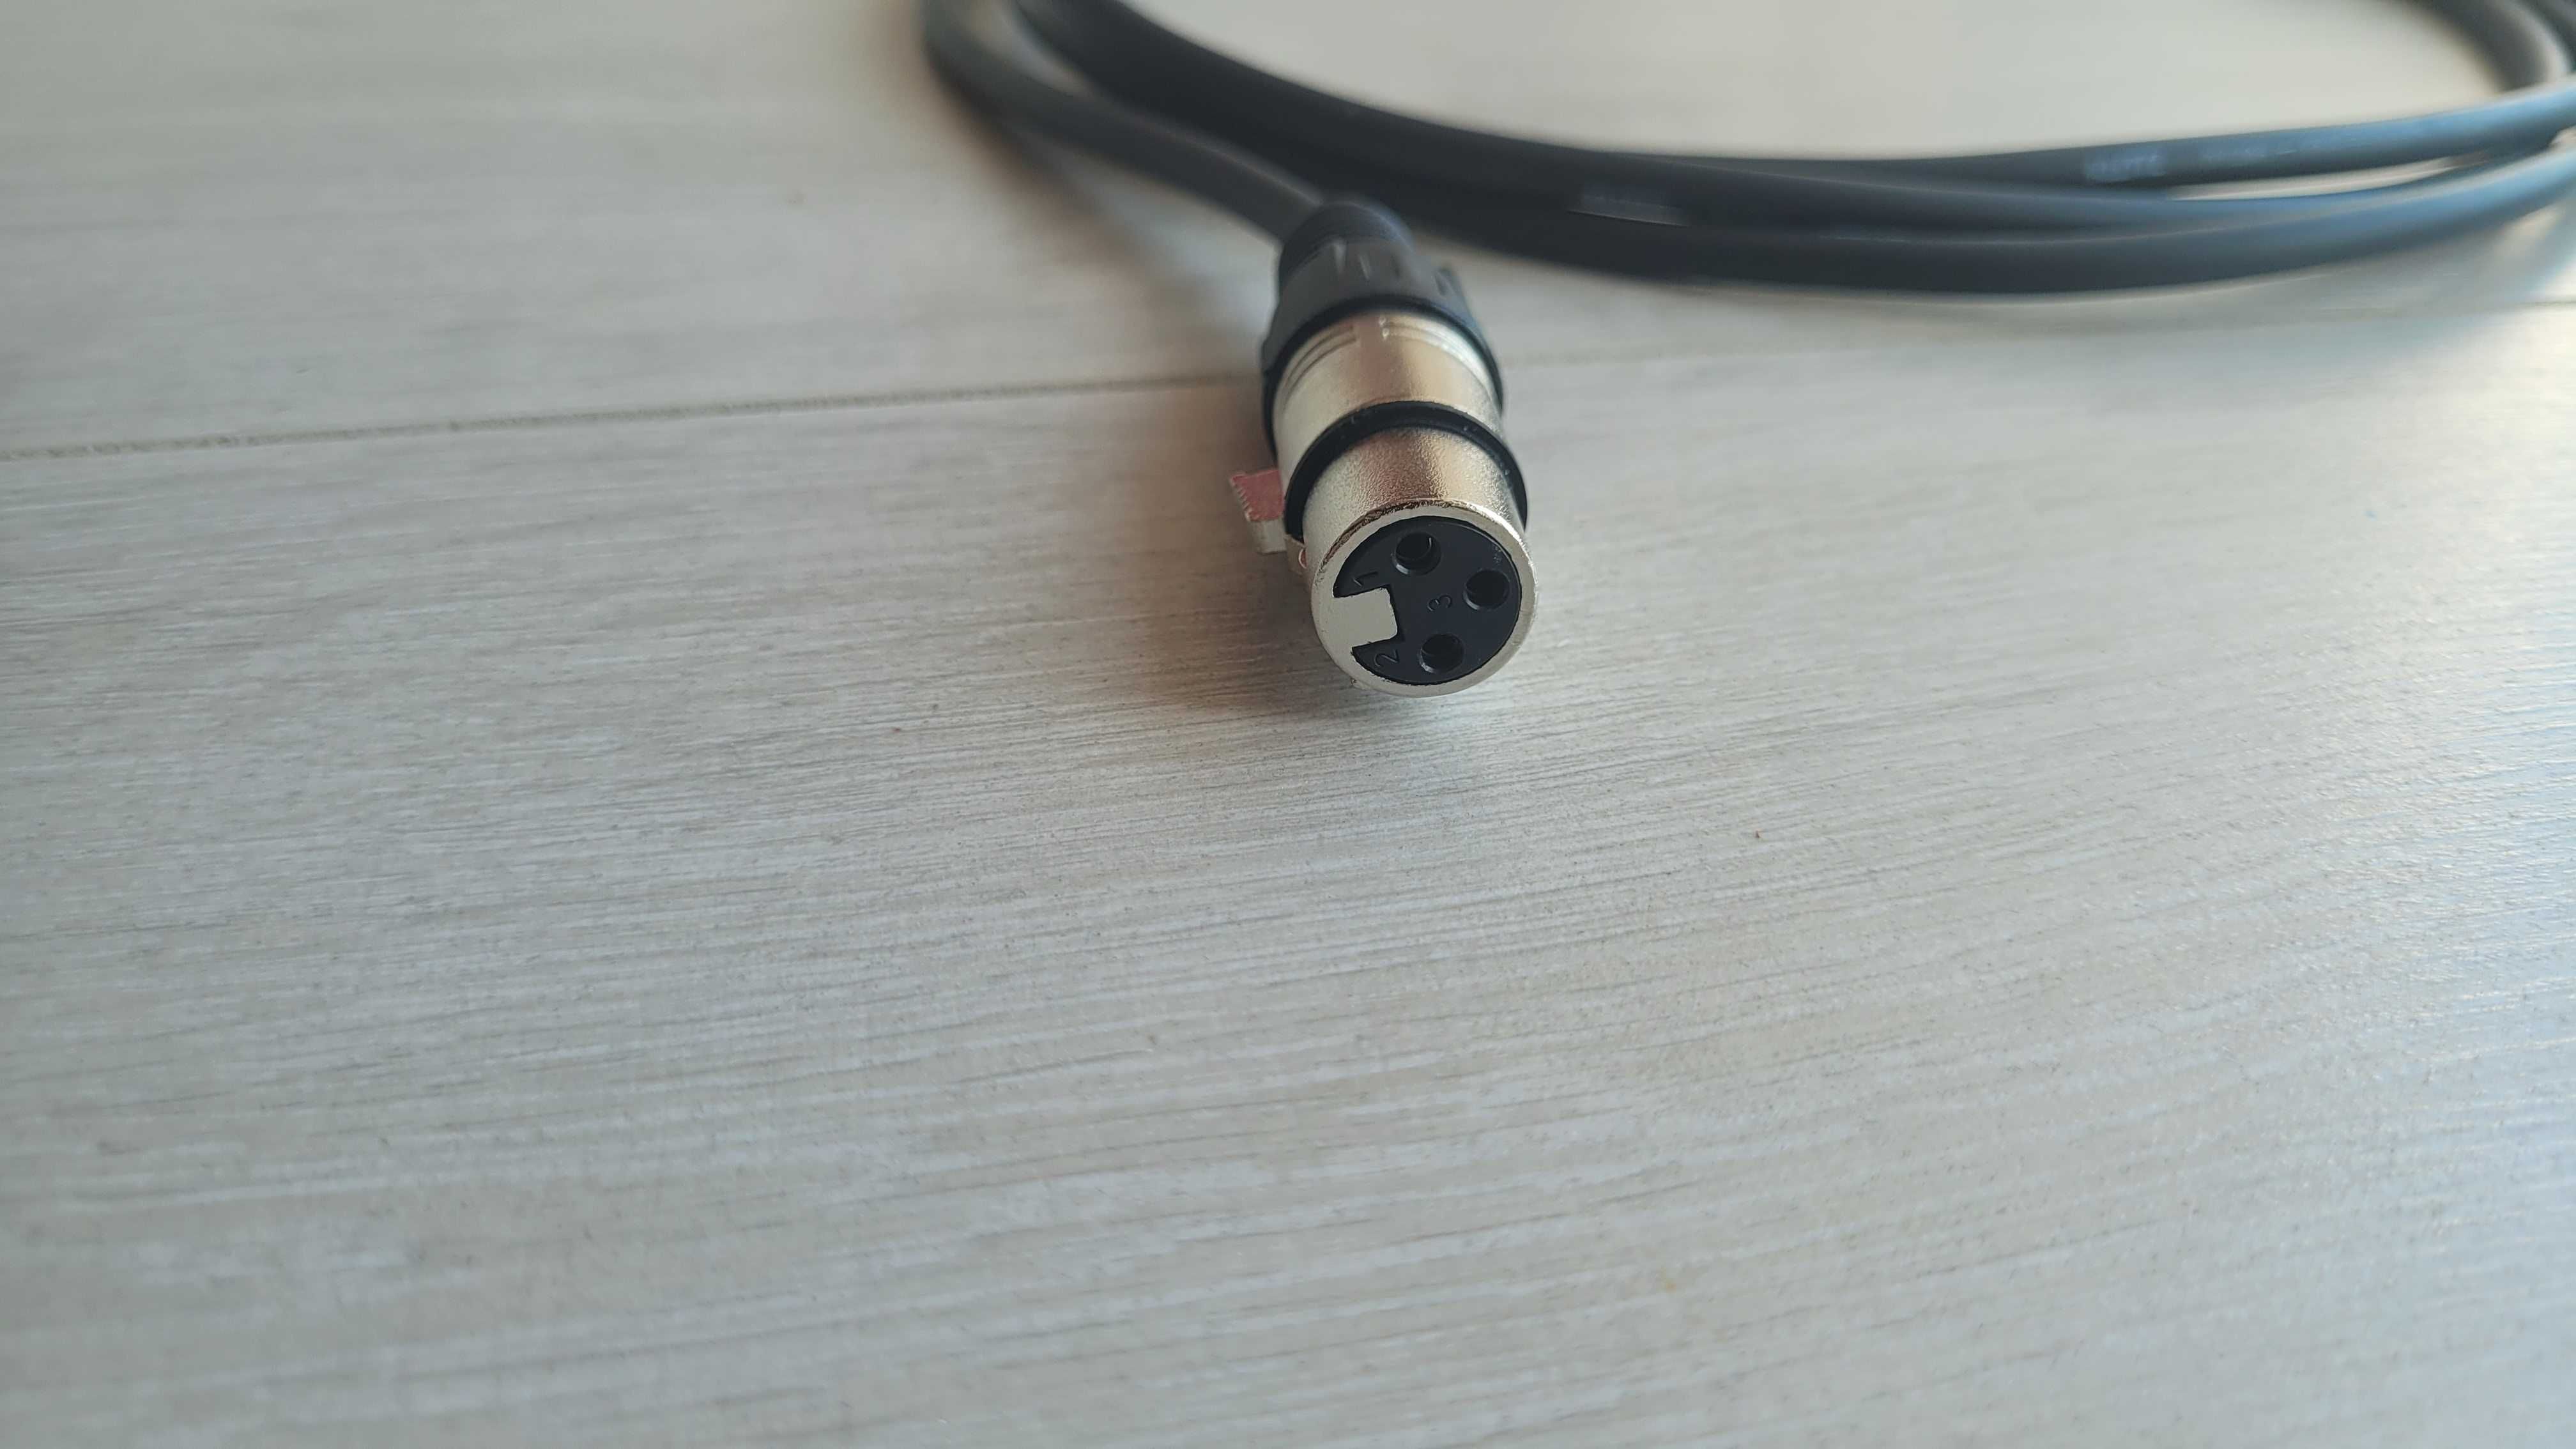 Kabel mikrofonowy 3 metry klotz MY206 GmbH XLr